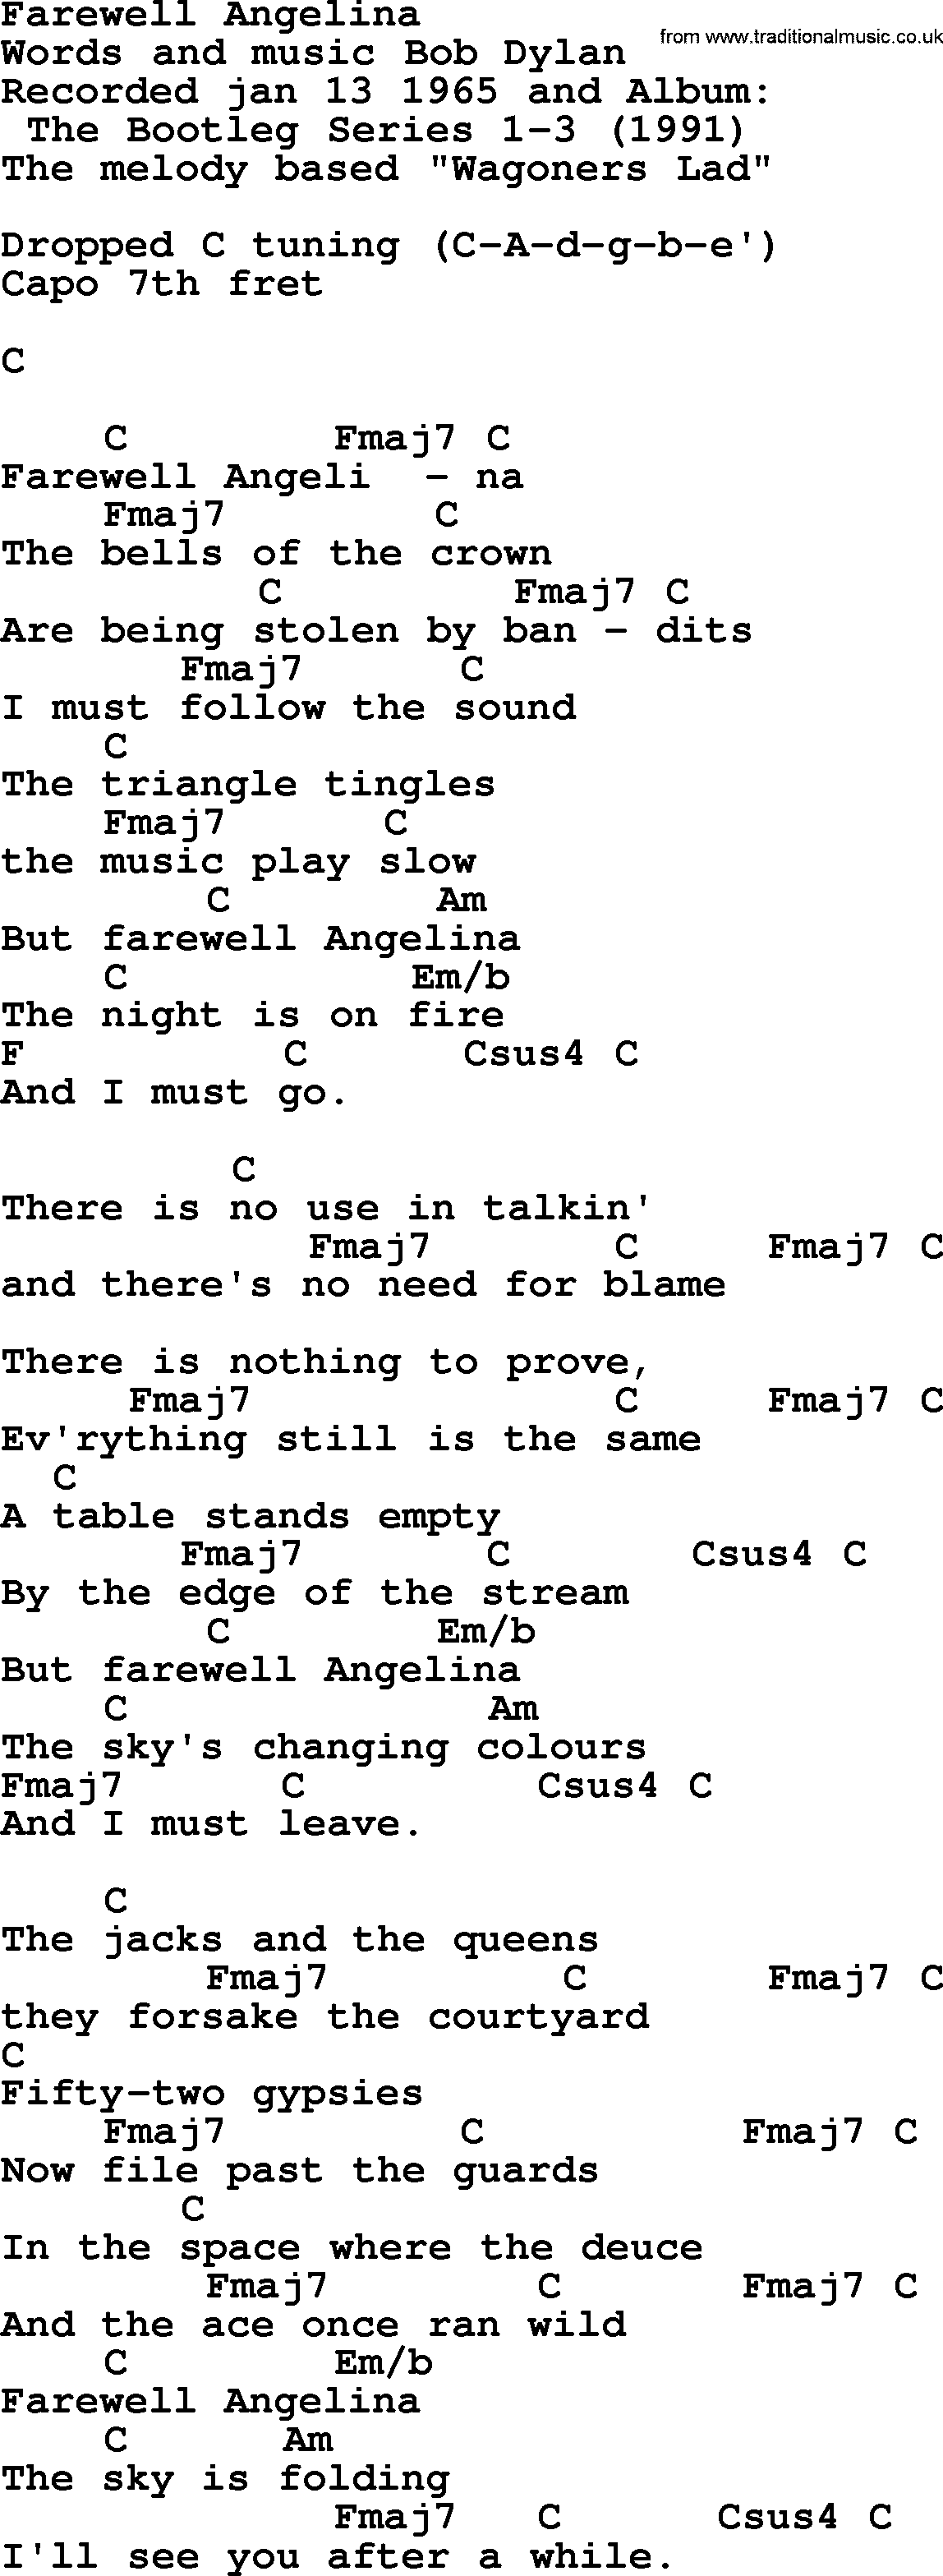 Bob Dylan song, lyrics with chords - Farewell Angelina